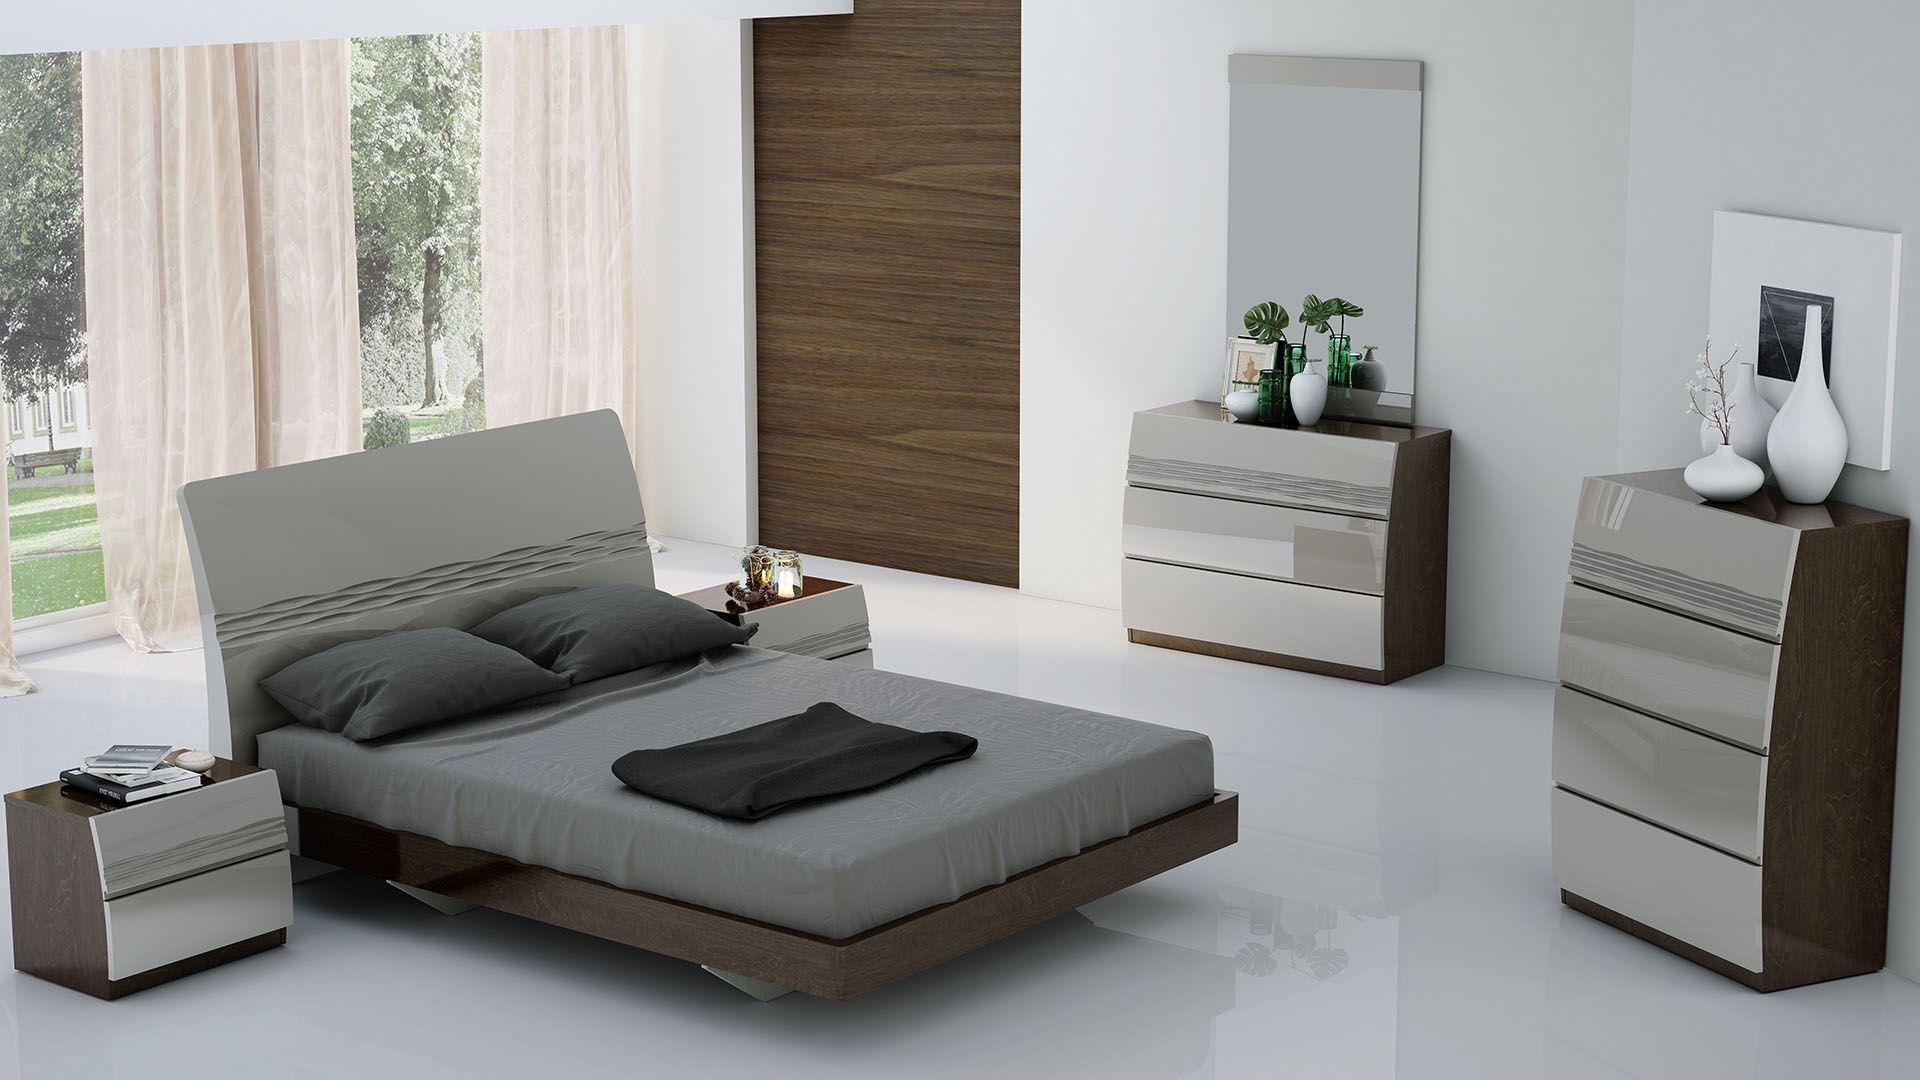 

                    
American Eagle Furniture B-P102-Q Platform Bedroom Set Brown/Light Gray  Purchase 
